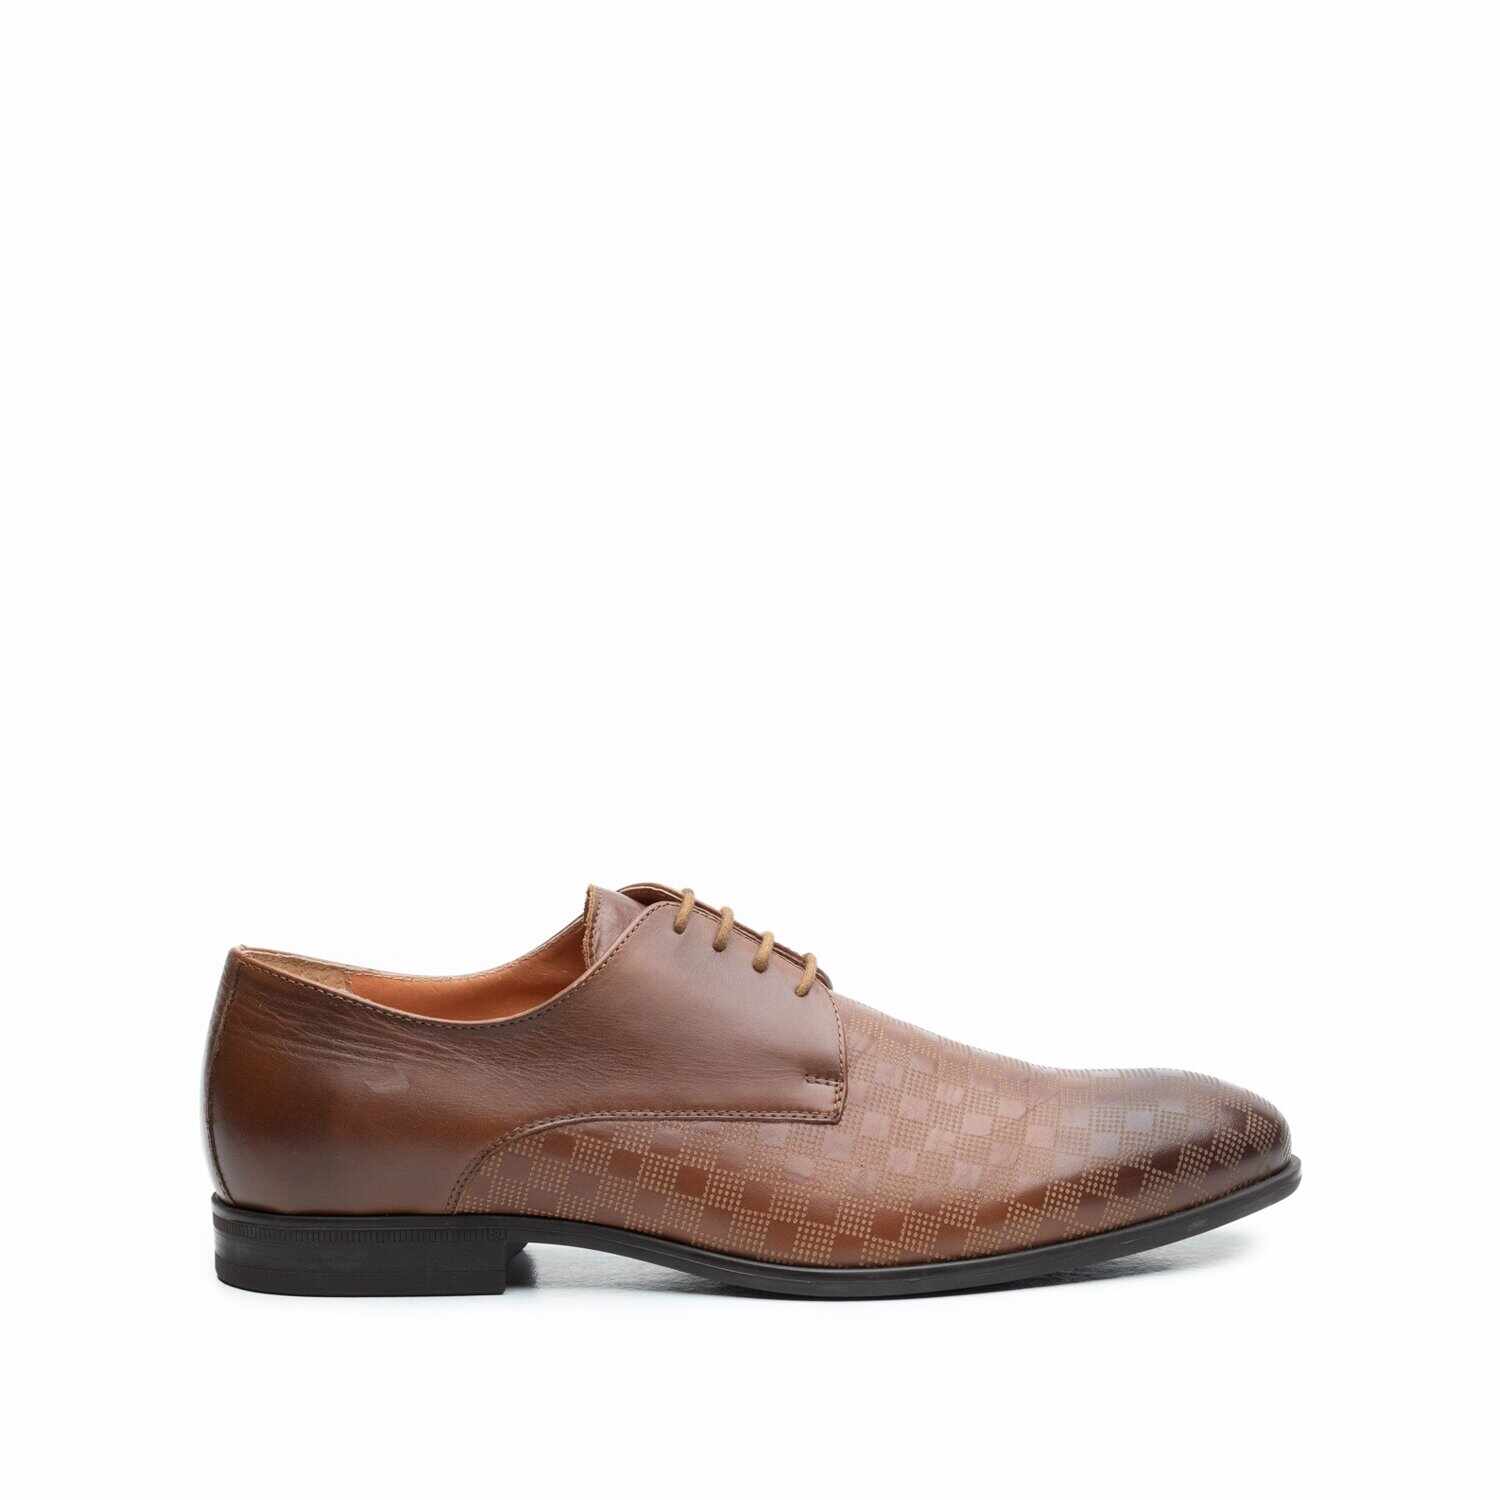 Pantofi eleganti barbati din piele naturala Leofex- 897 cognac